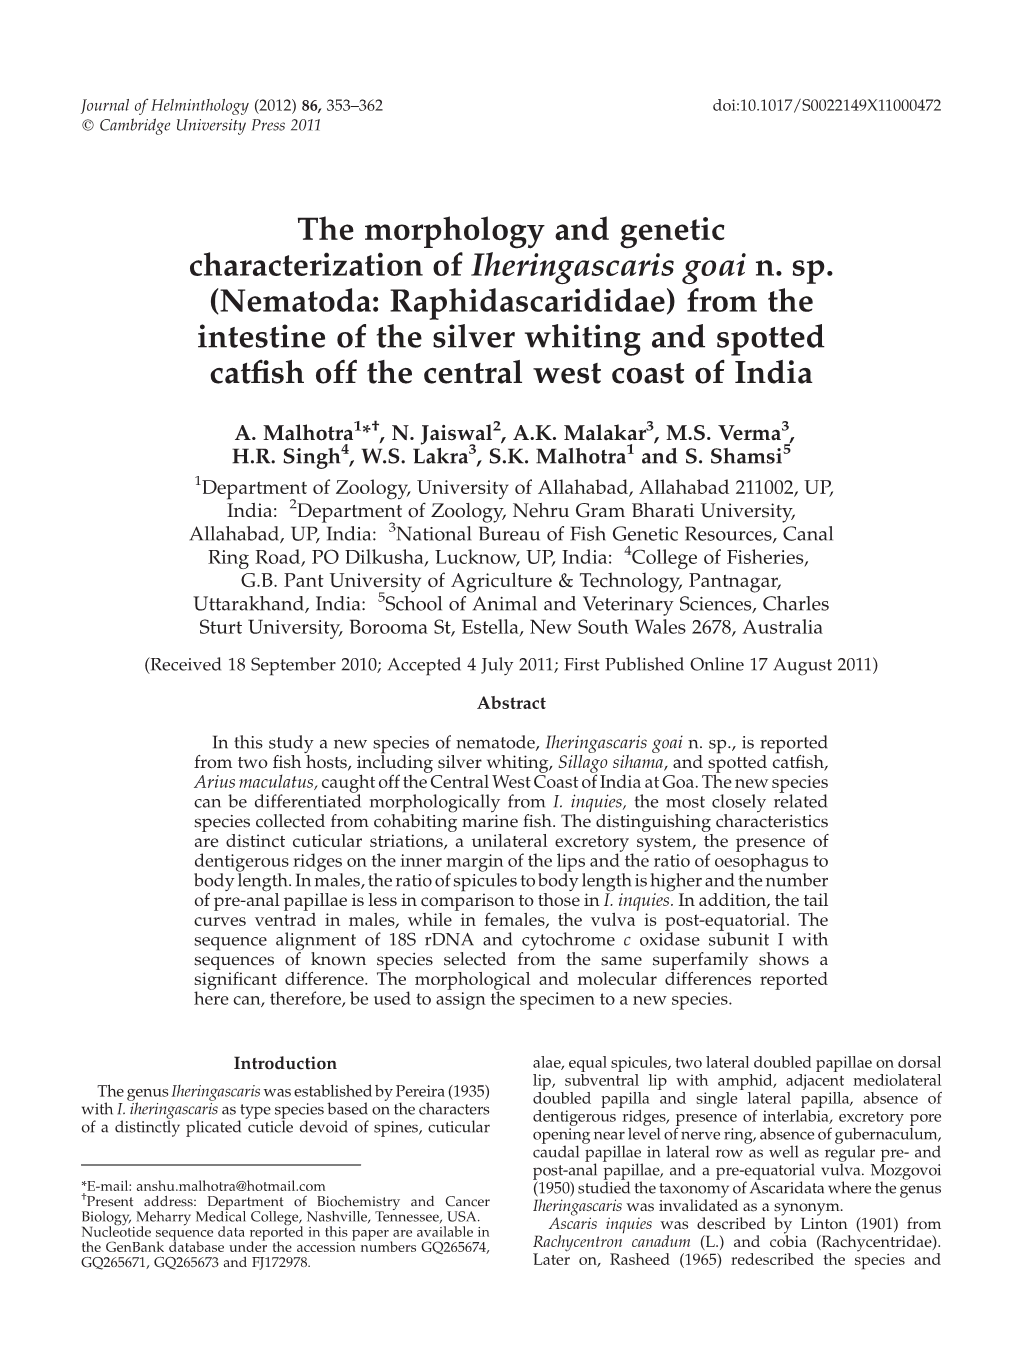 The Morphology and Genetic Characterization of Iheringascaris Goai N